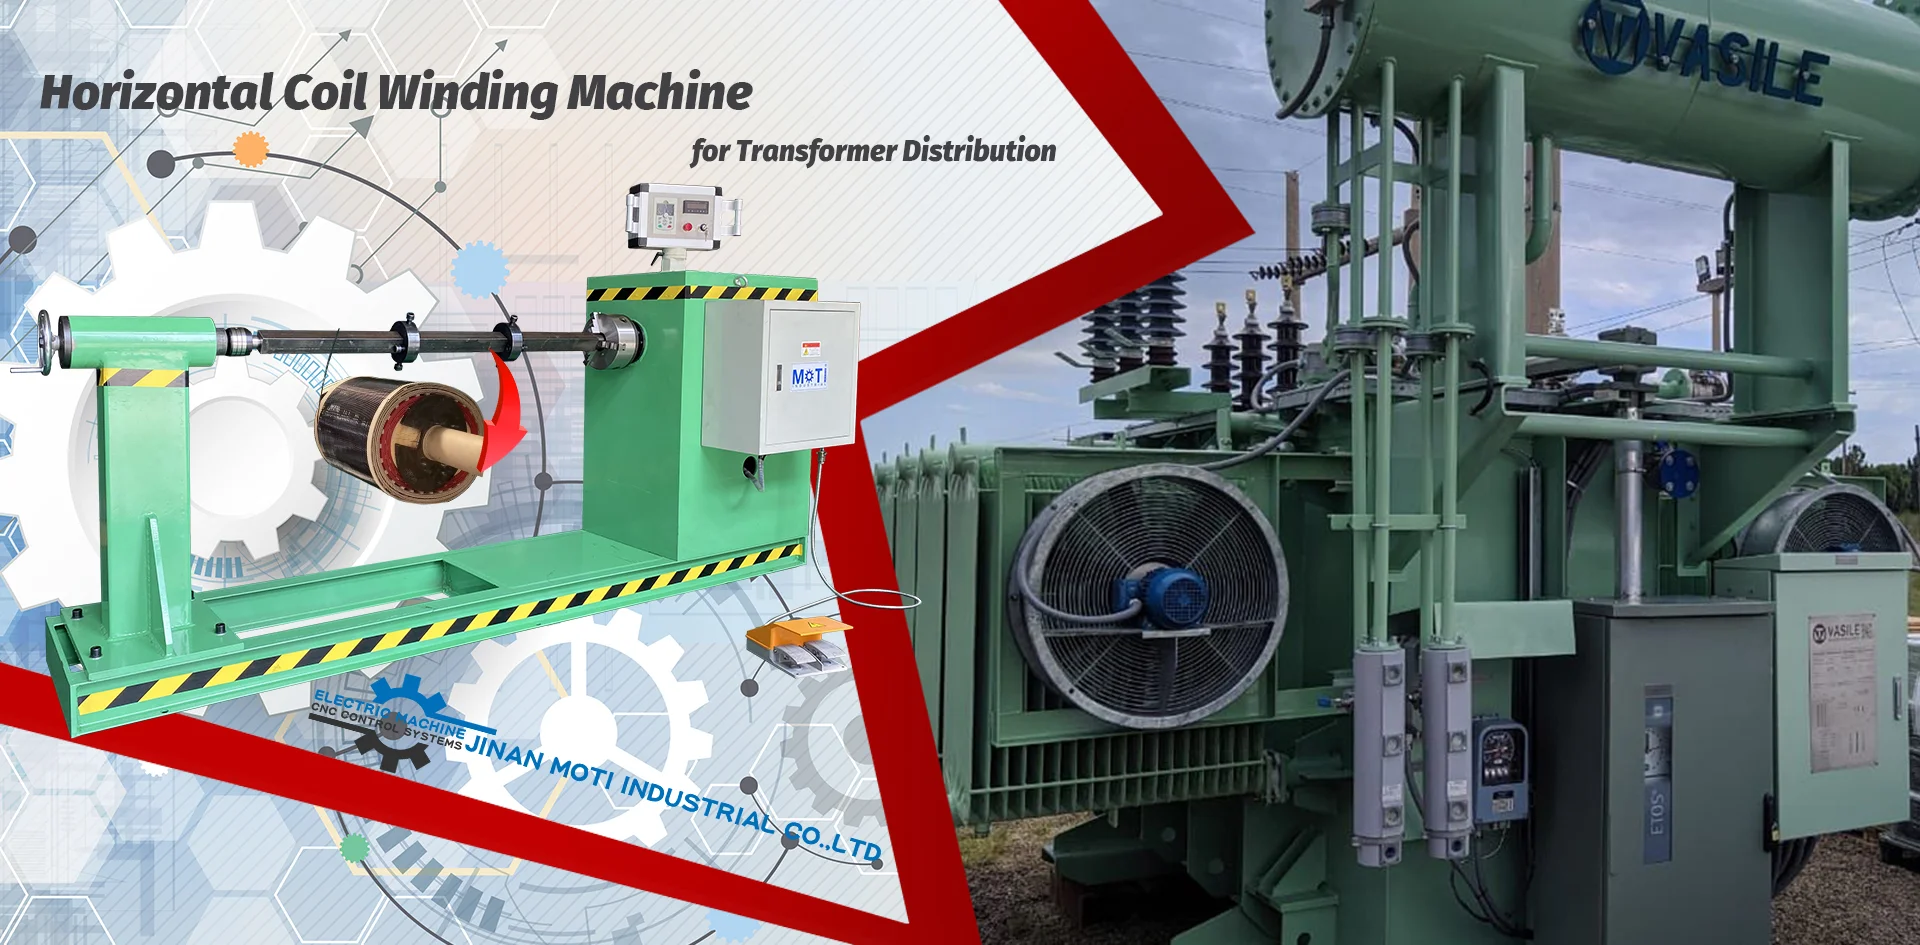 vitransformer coil winding machine-20210713